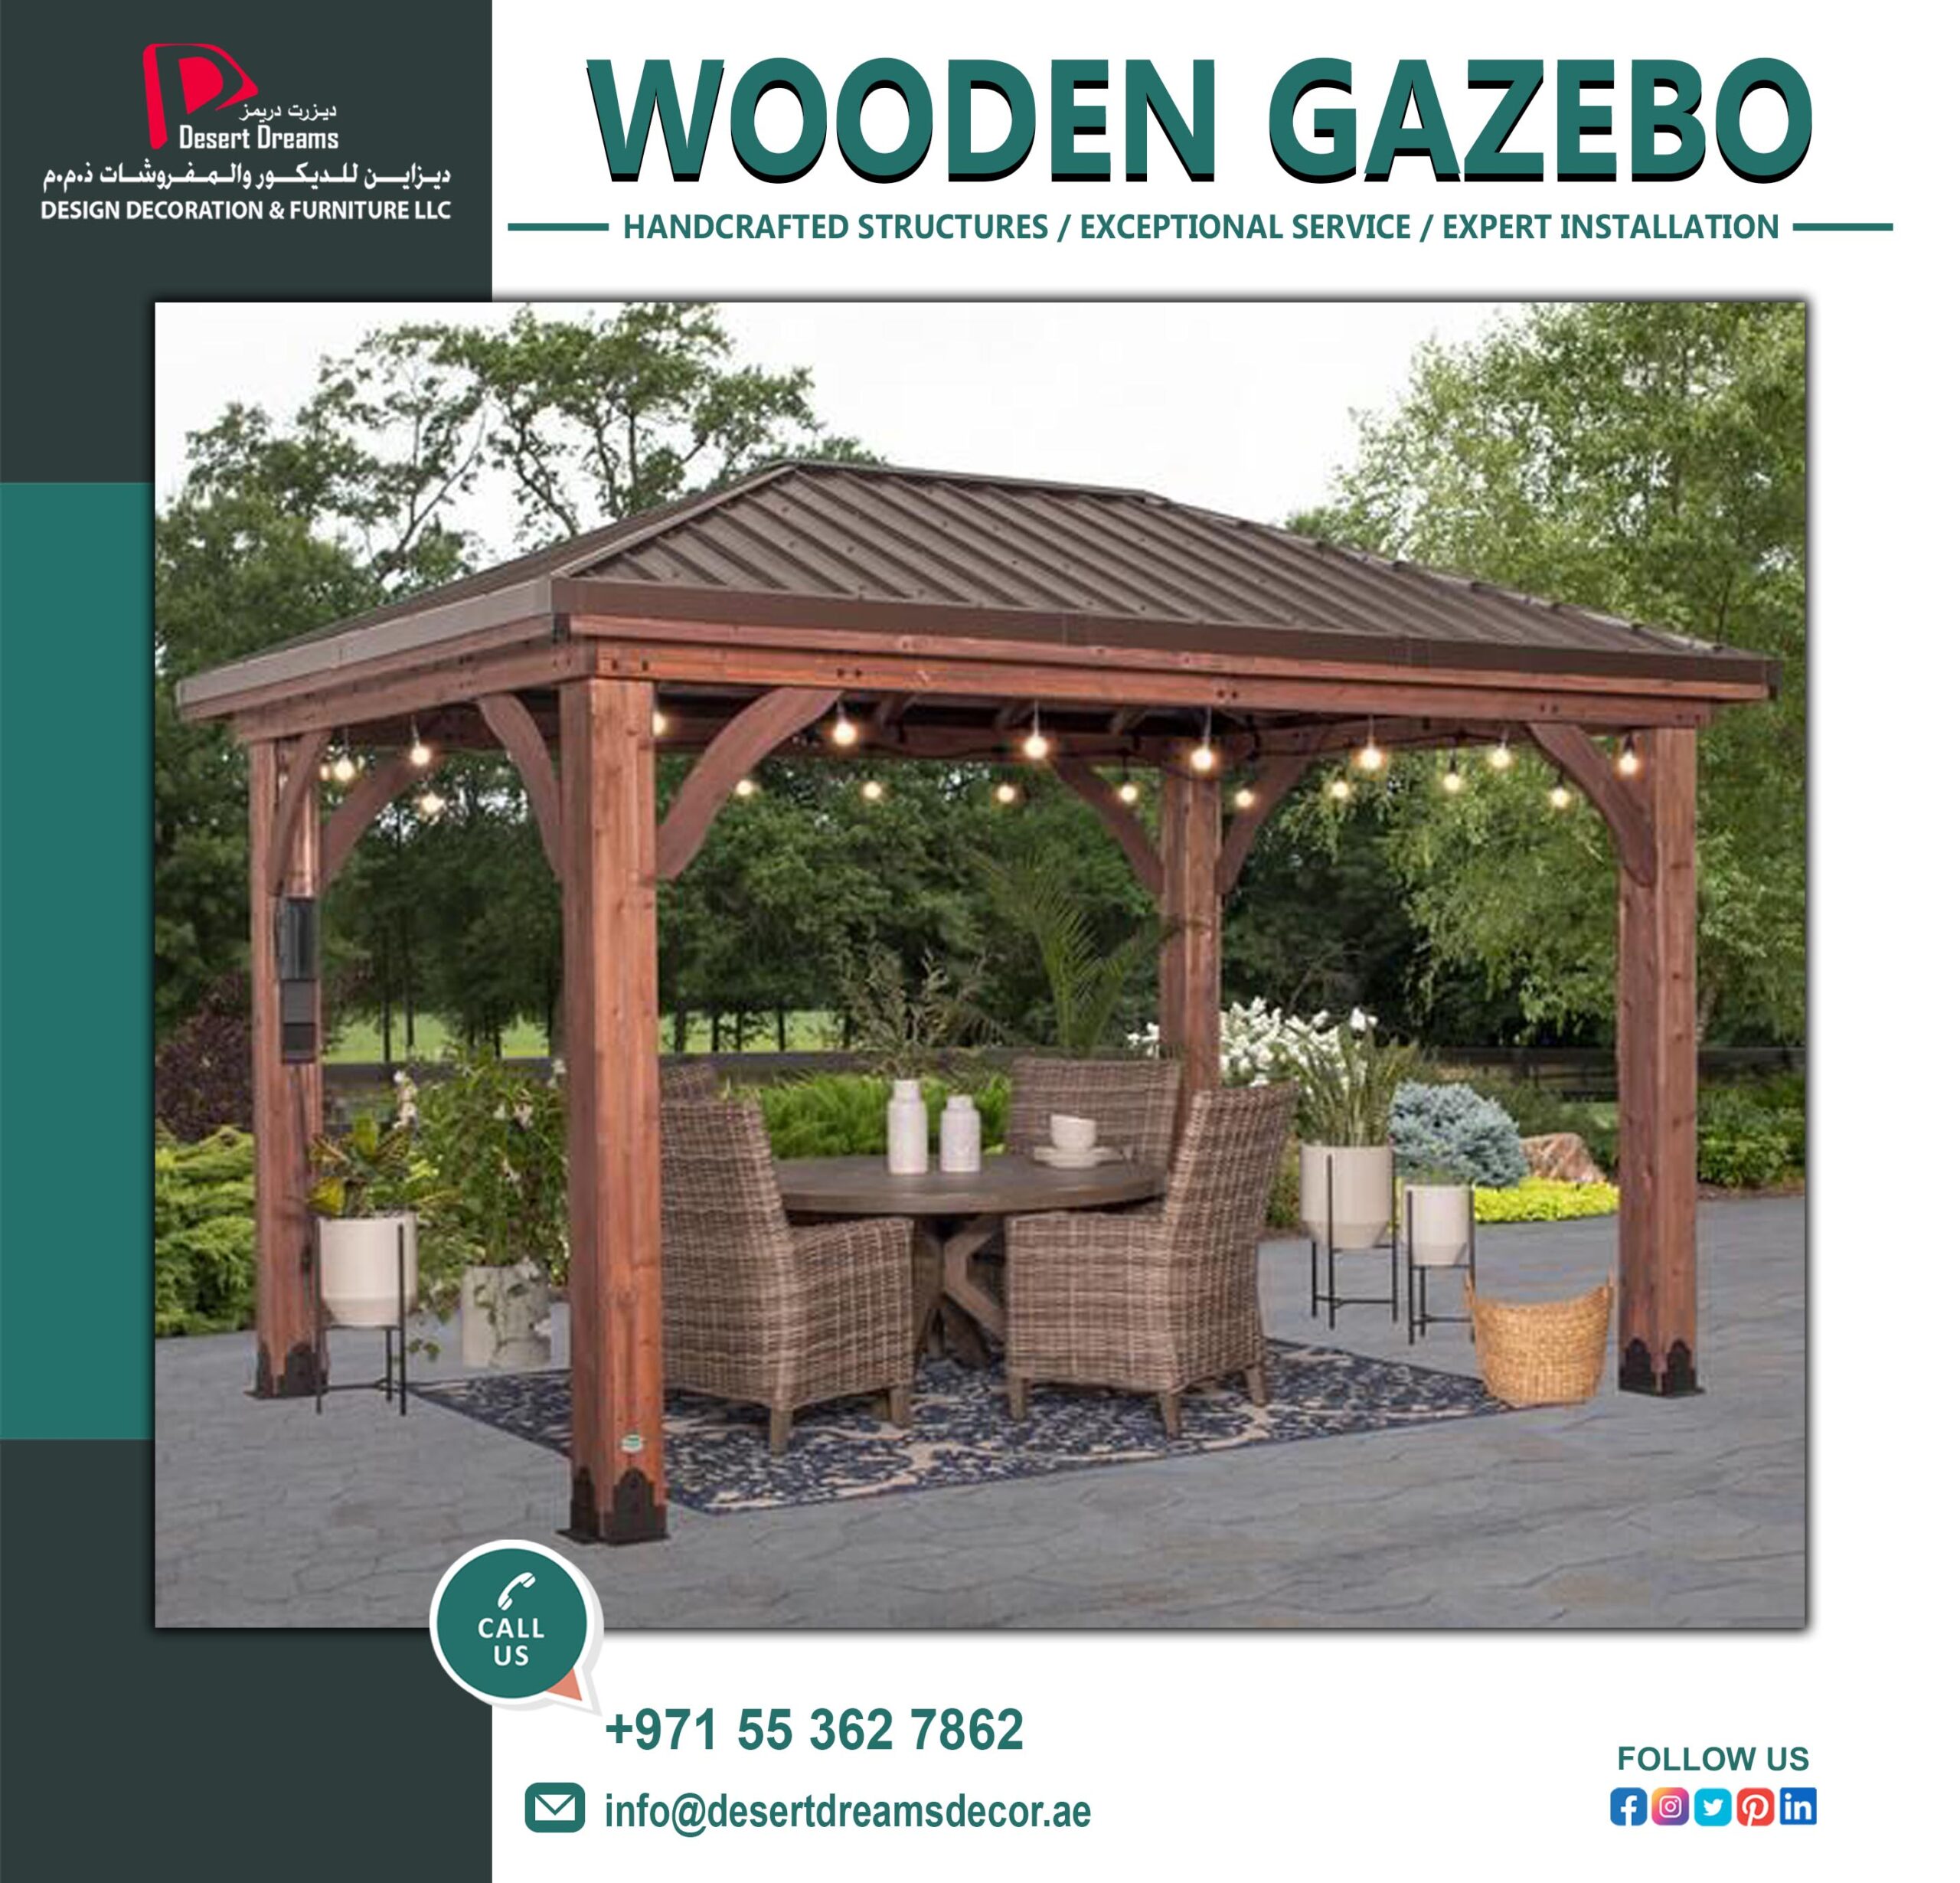 Supply and Install Wooden Gazebo in Dubai_Wooden Gazebo Abu Dhabi and Al Ain (1).jpg